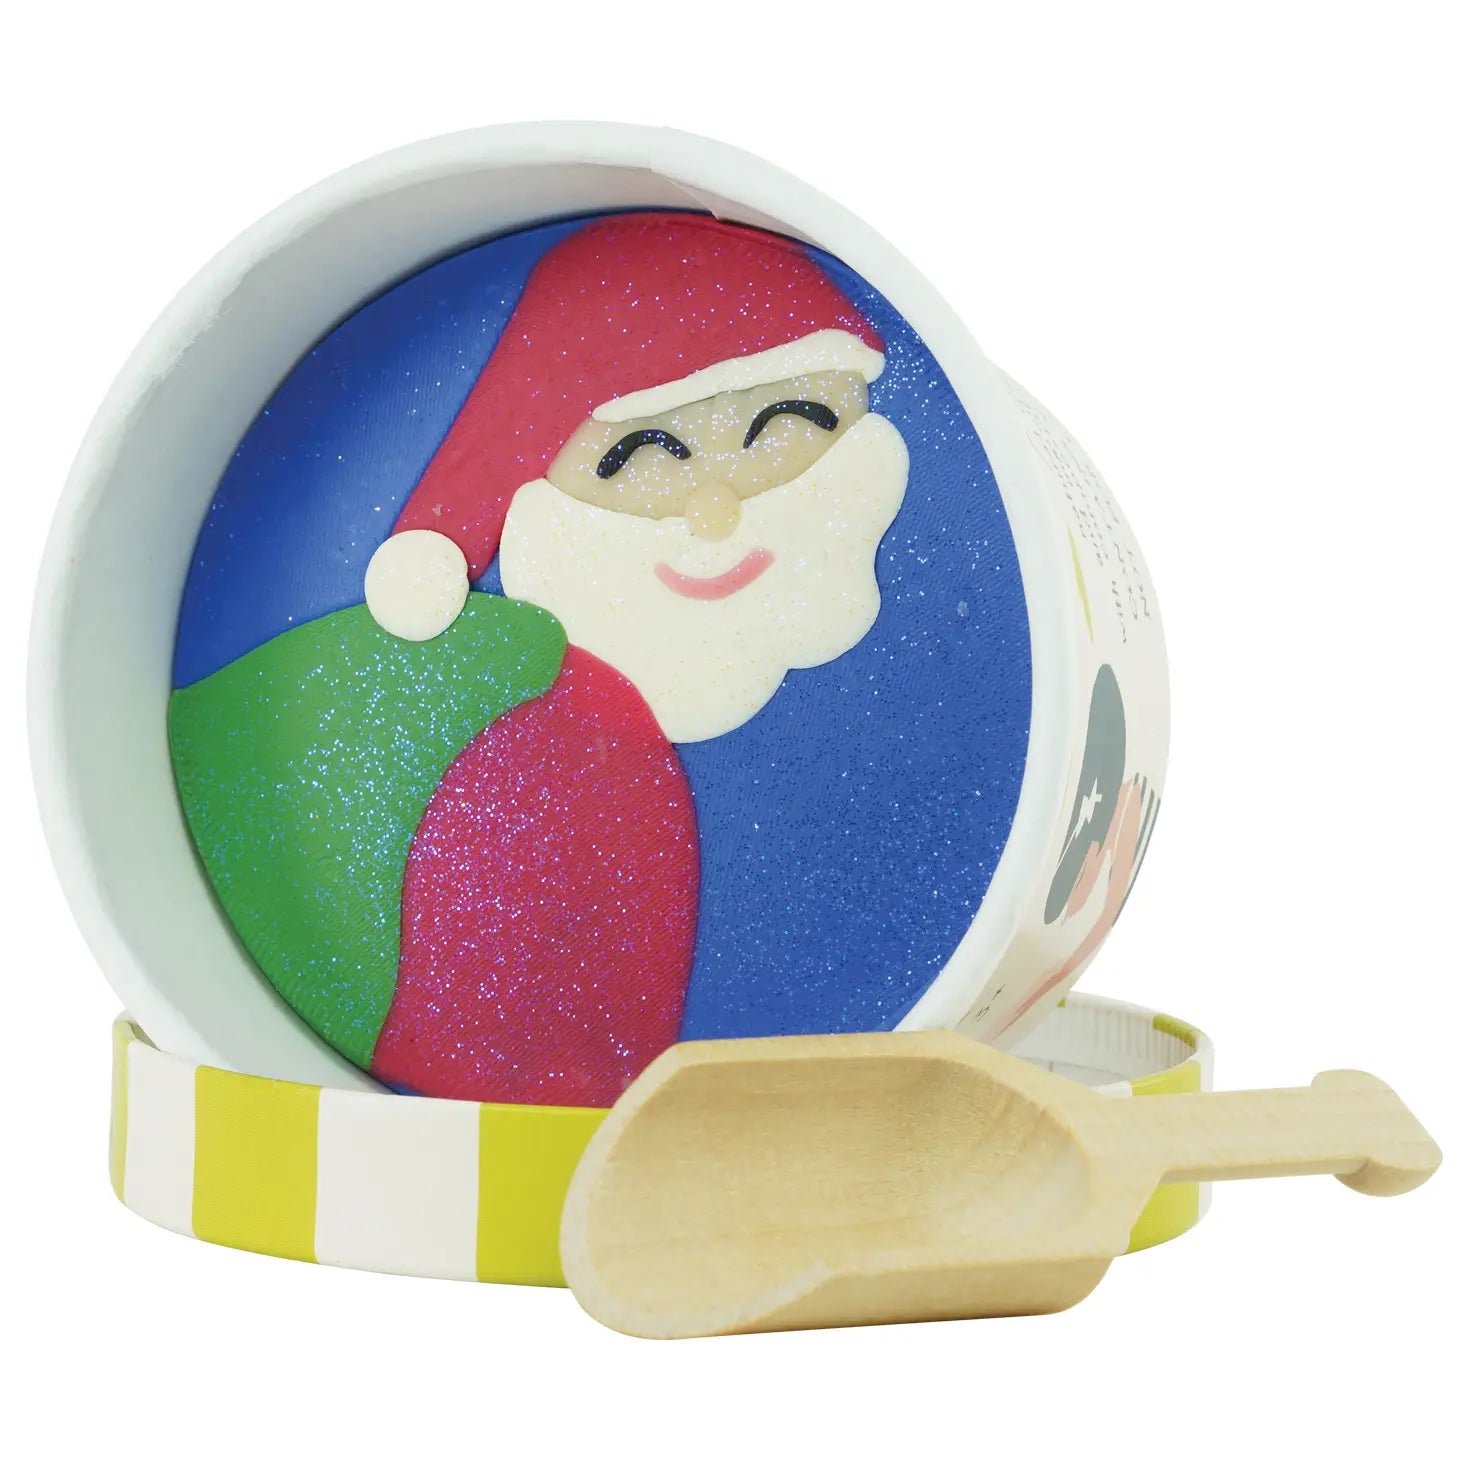 Surprised Santa Dough Cup